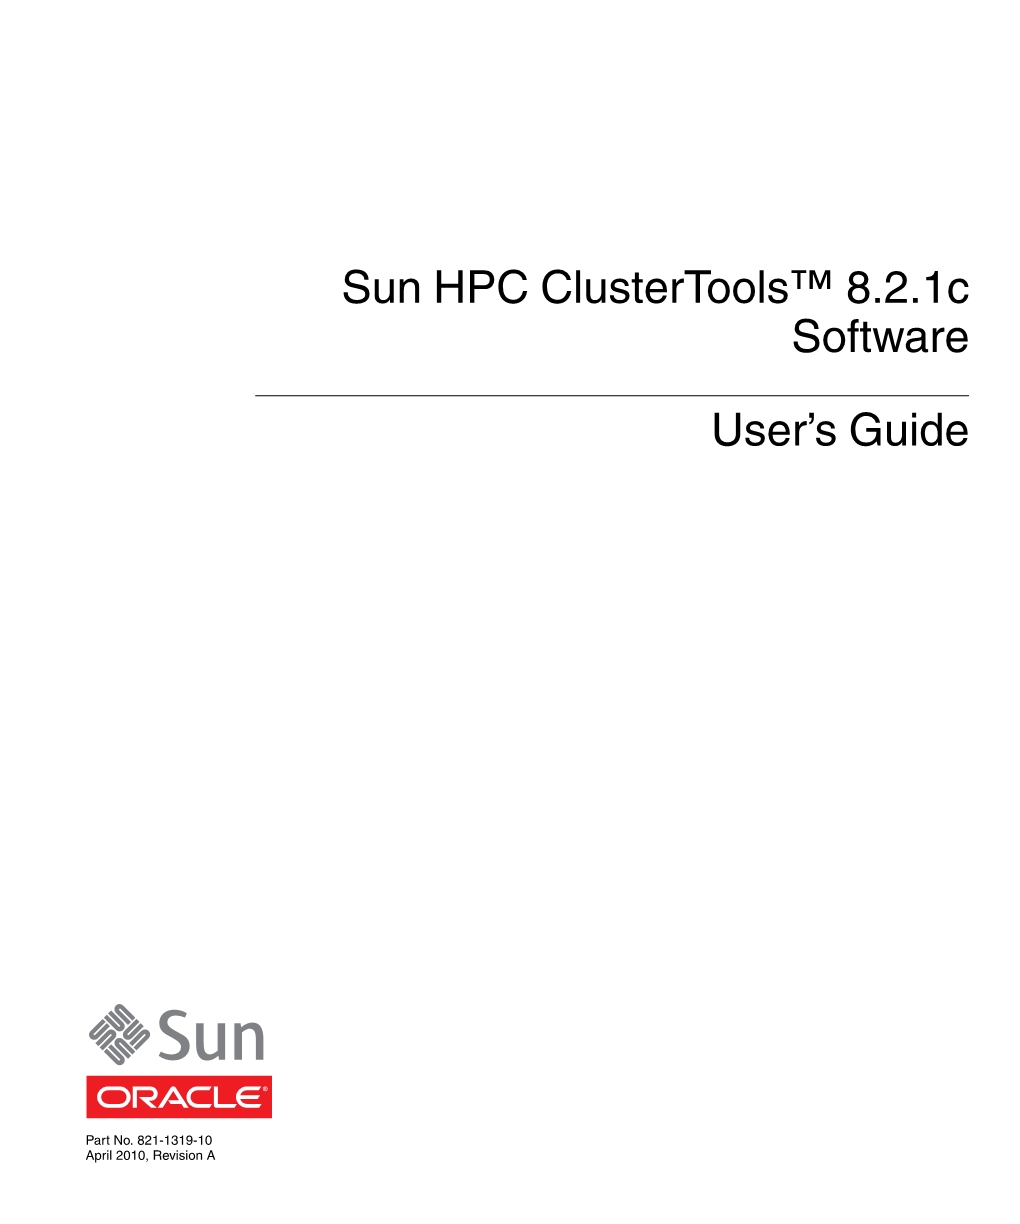 Sun HPC Clustertools 8.2.1C Software User's Guide